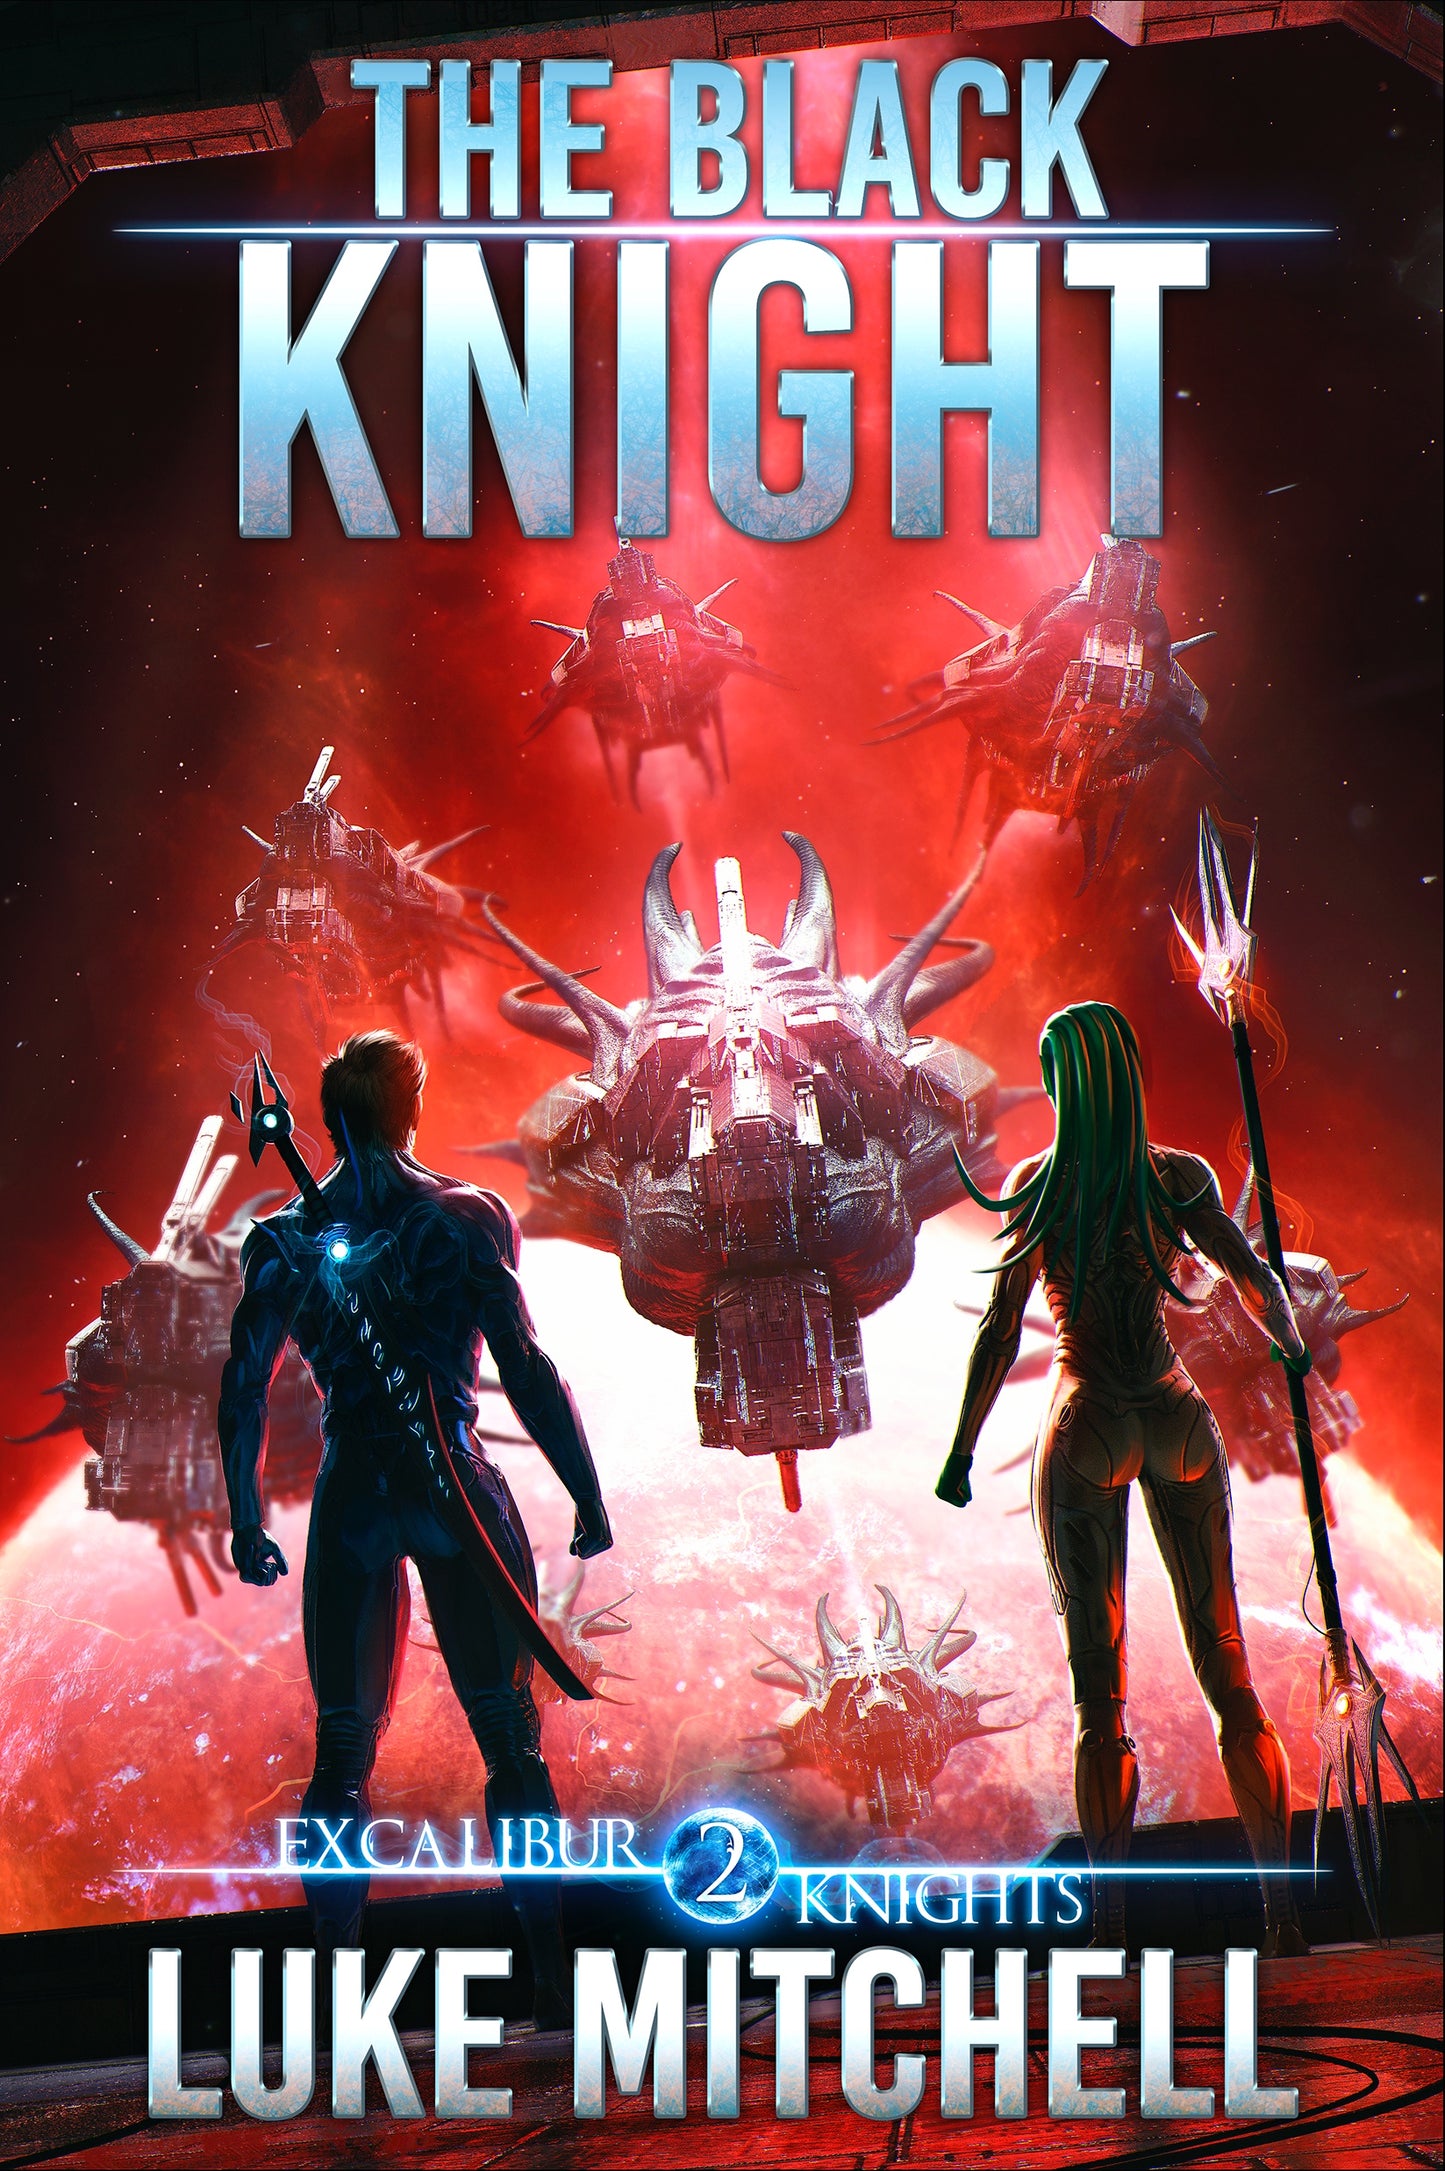 The Black Knight (Kindle and ePub)